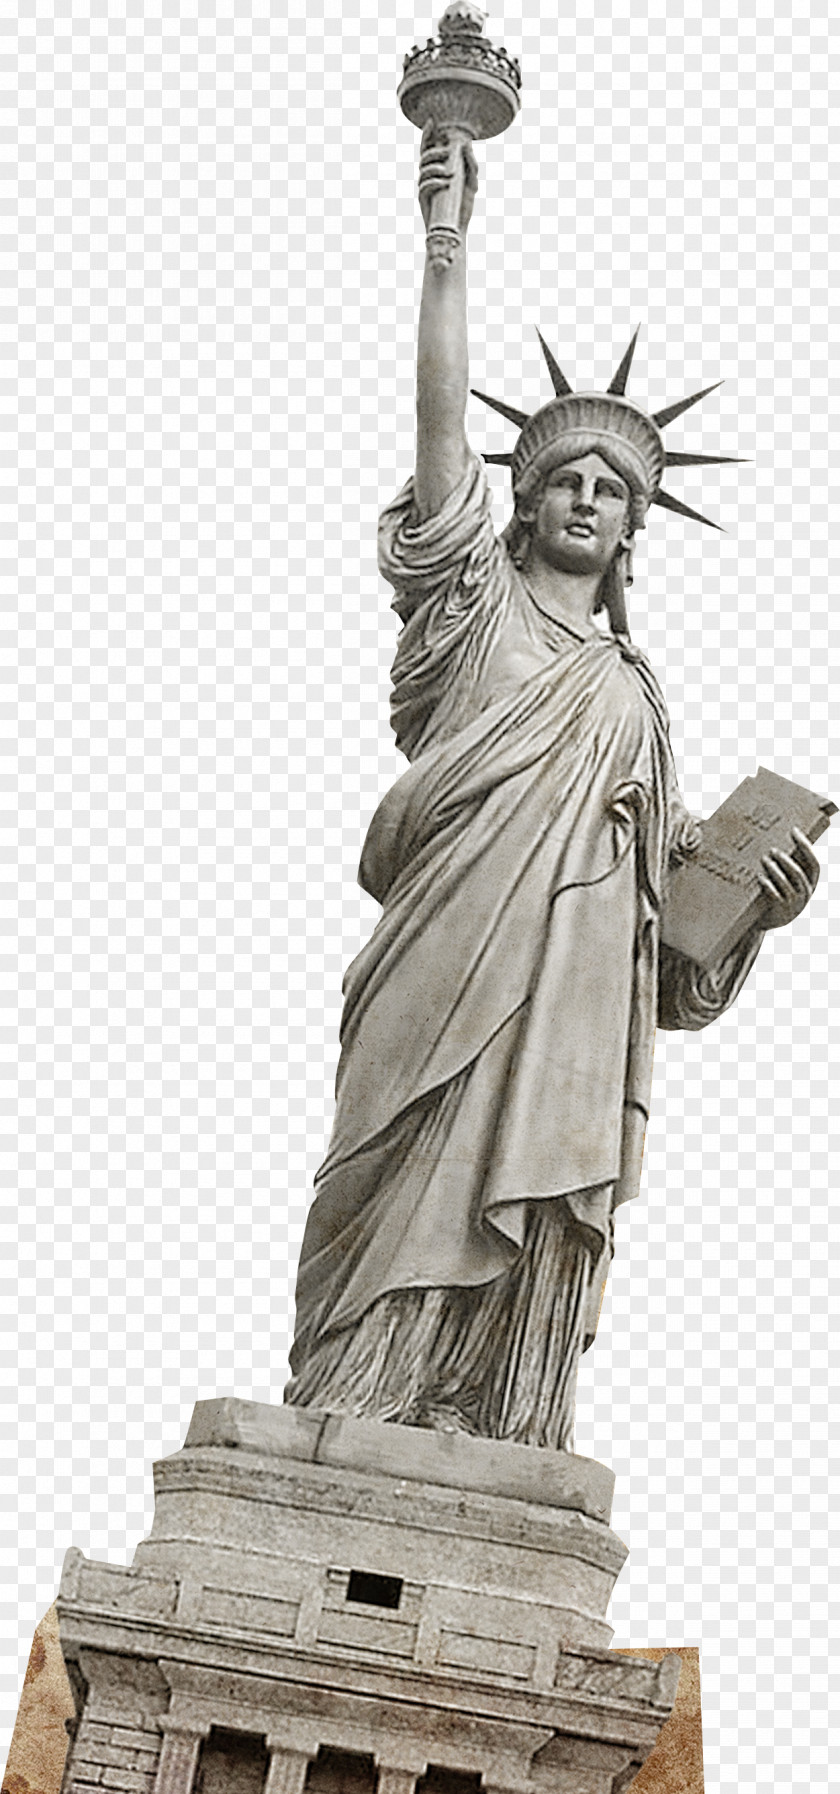 Statue Of Liberty One World Trade Center Landmark PNG